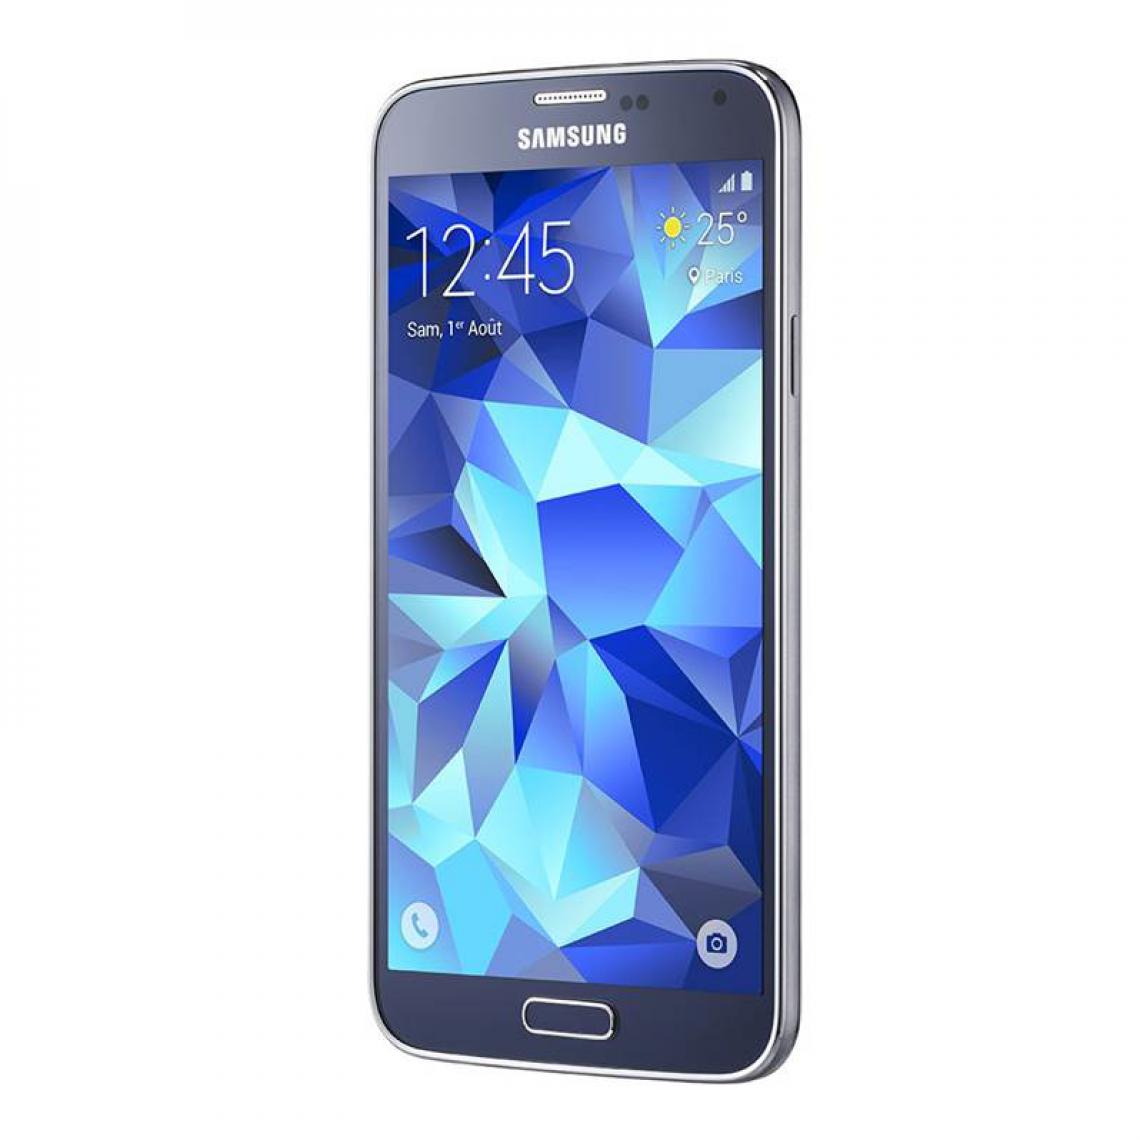 Samsung - Samsung Galaxy S5 Neo - iPhone